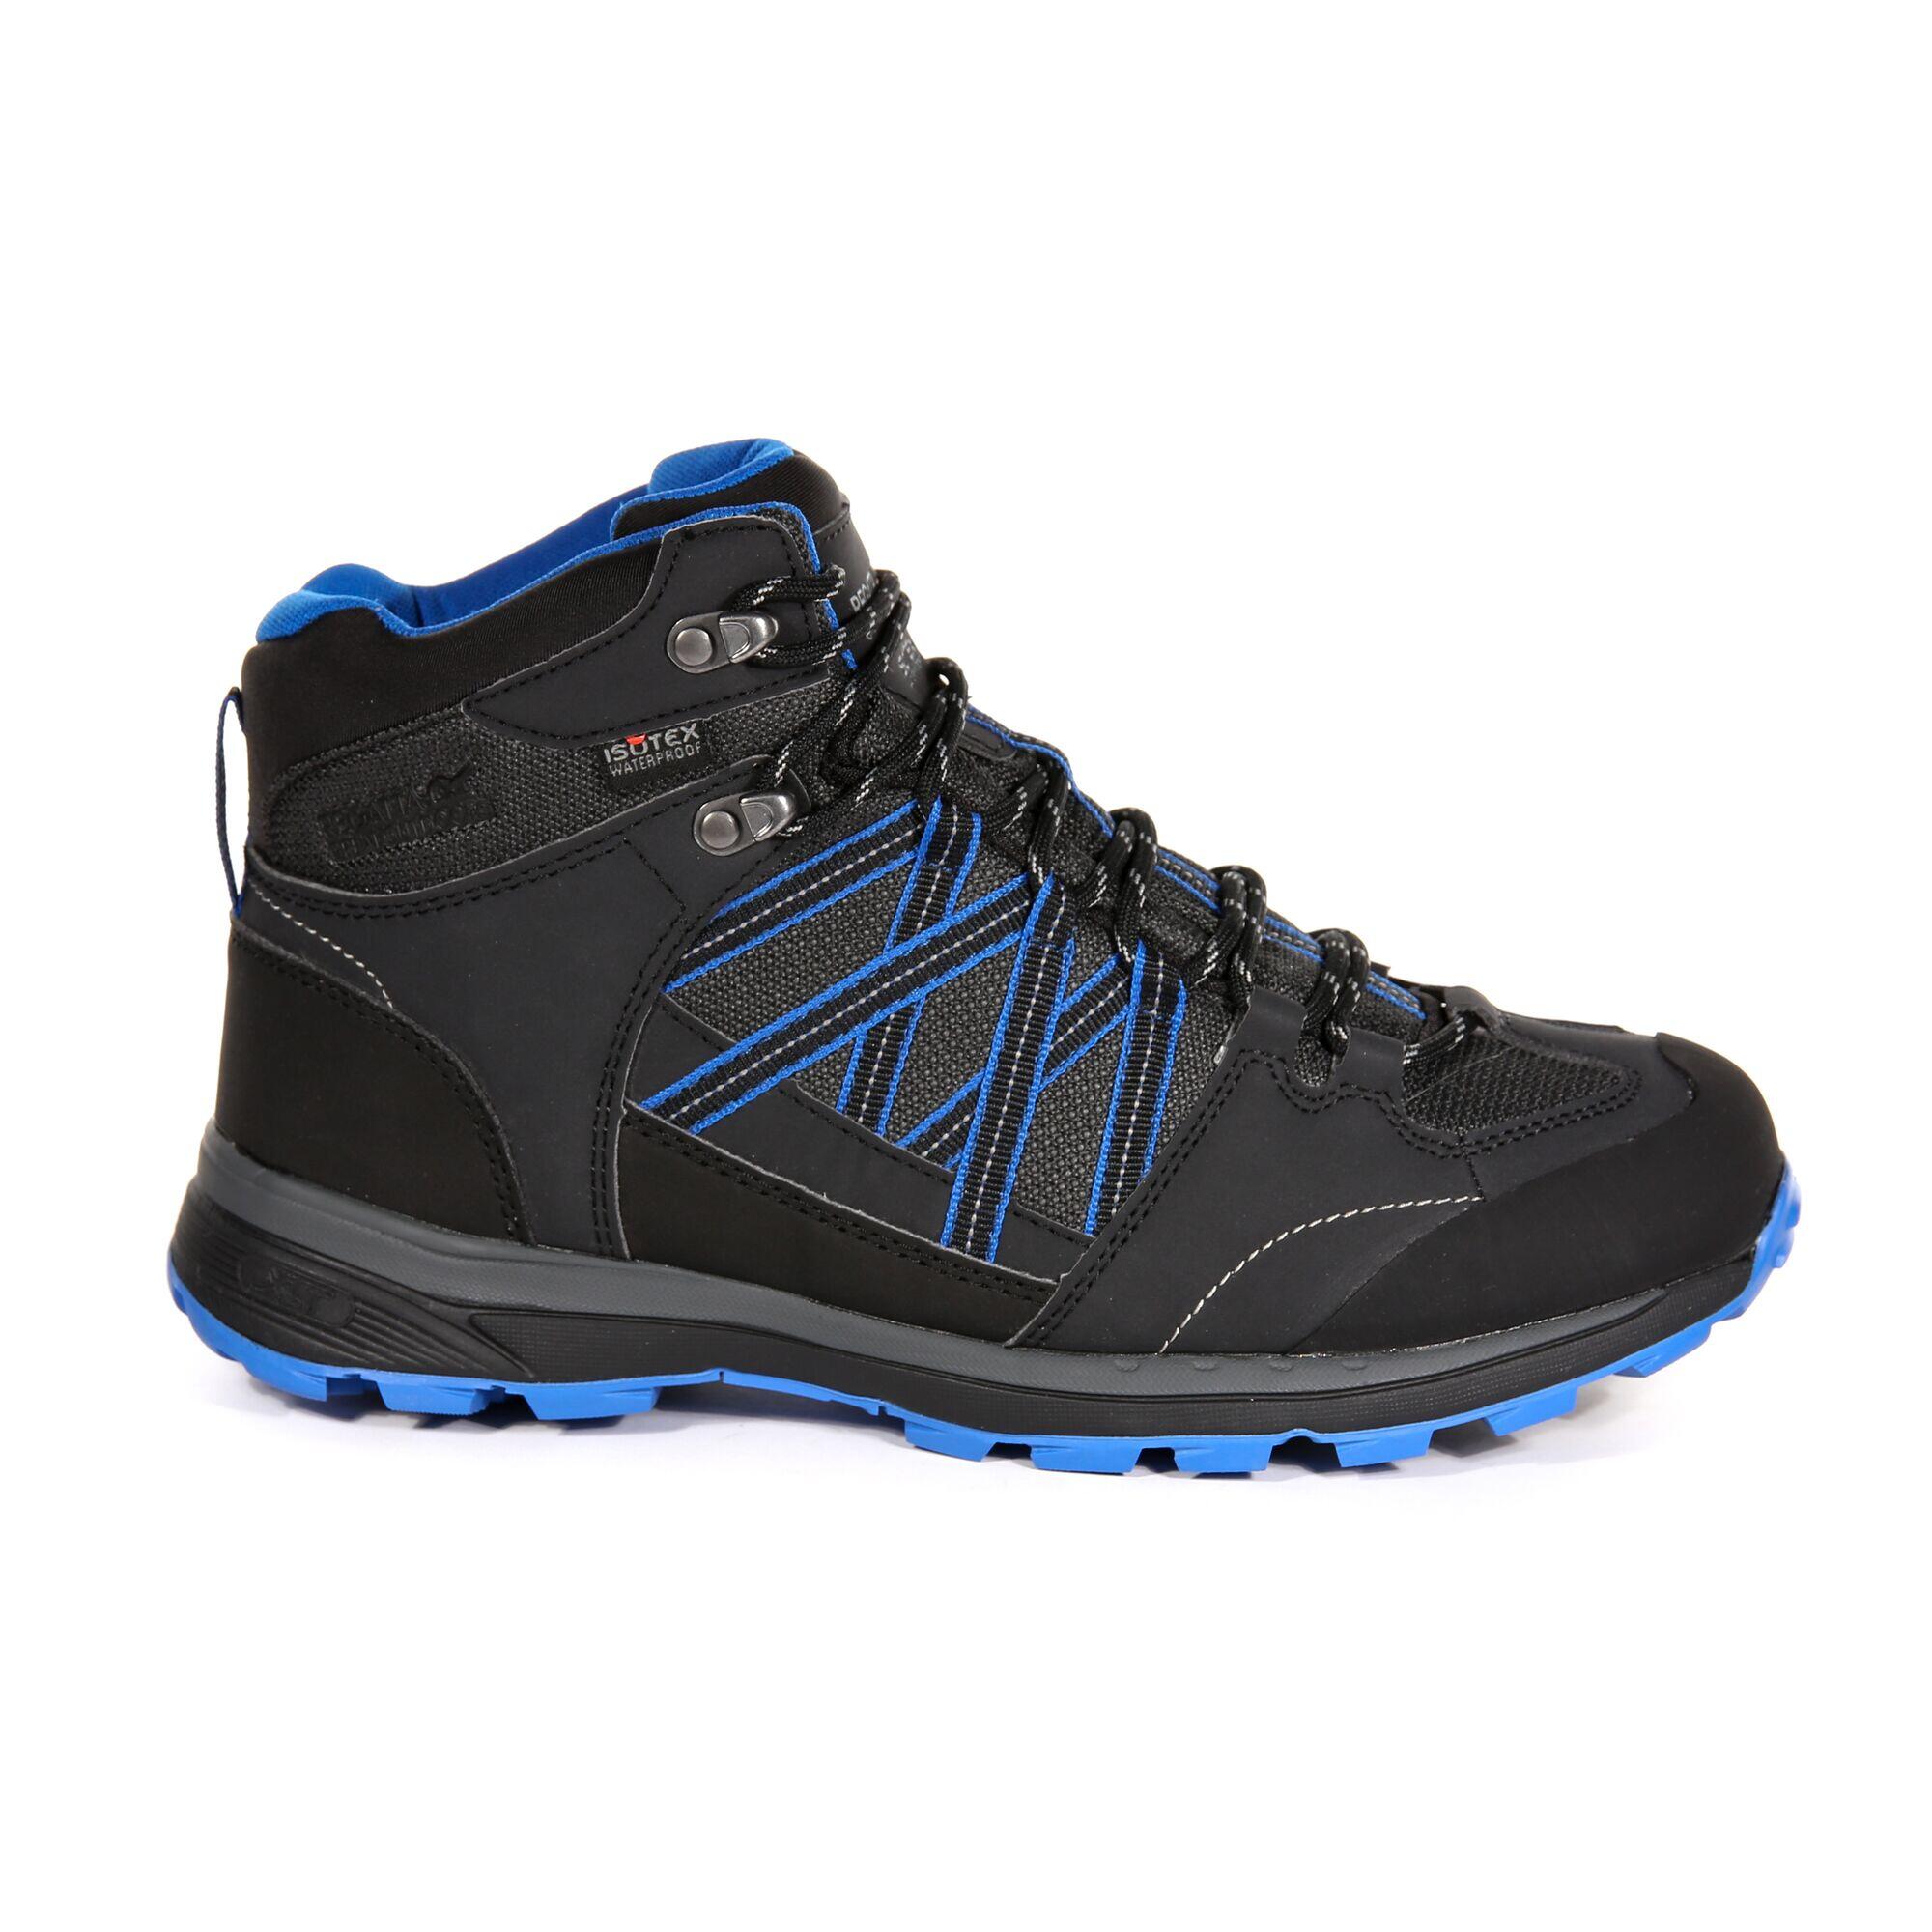 Samaris II Men's Hiking Boots - Dark Grey/Blue 2/5